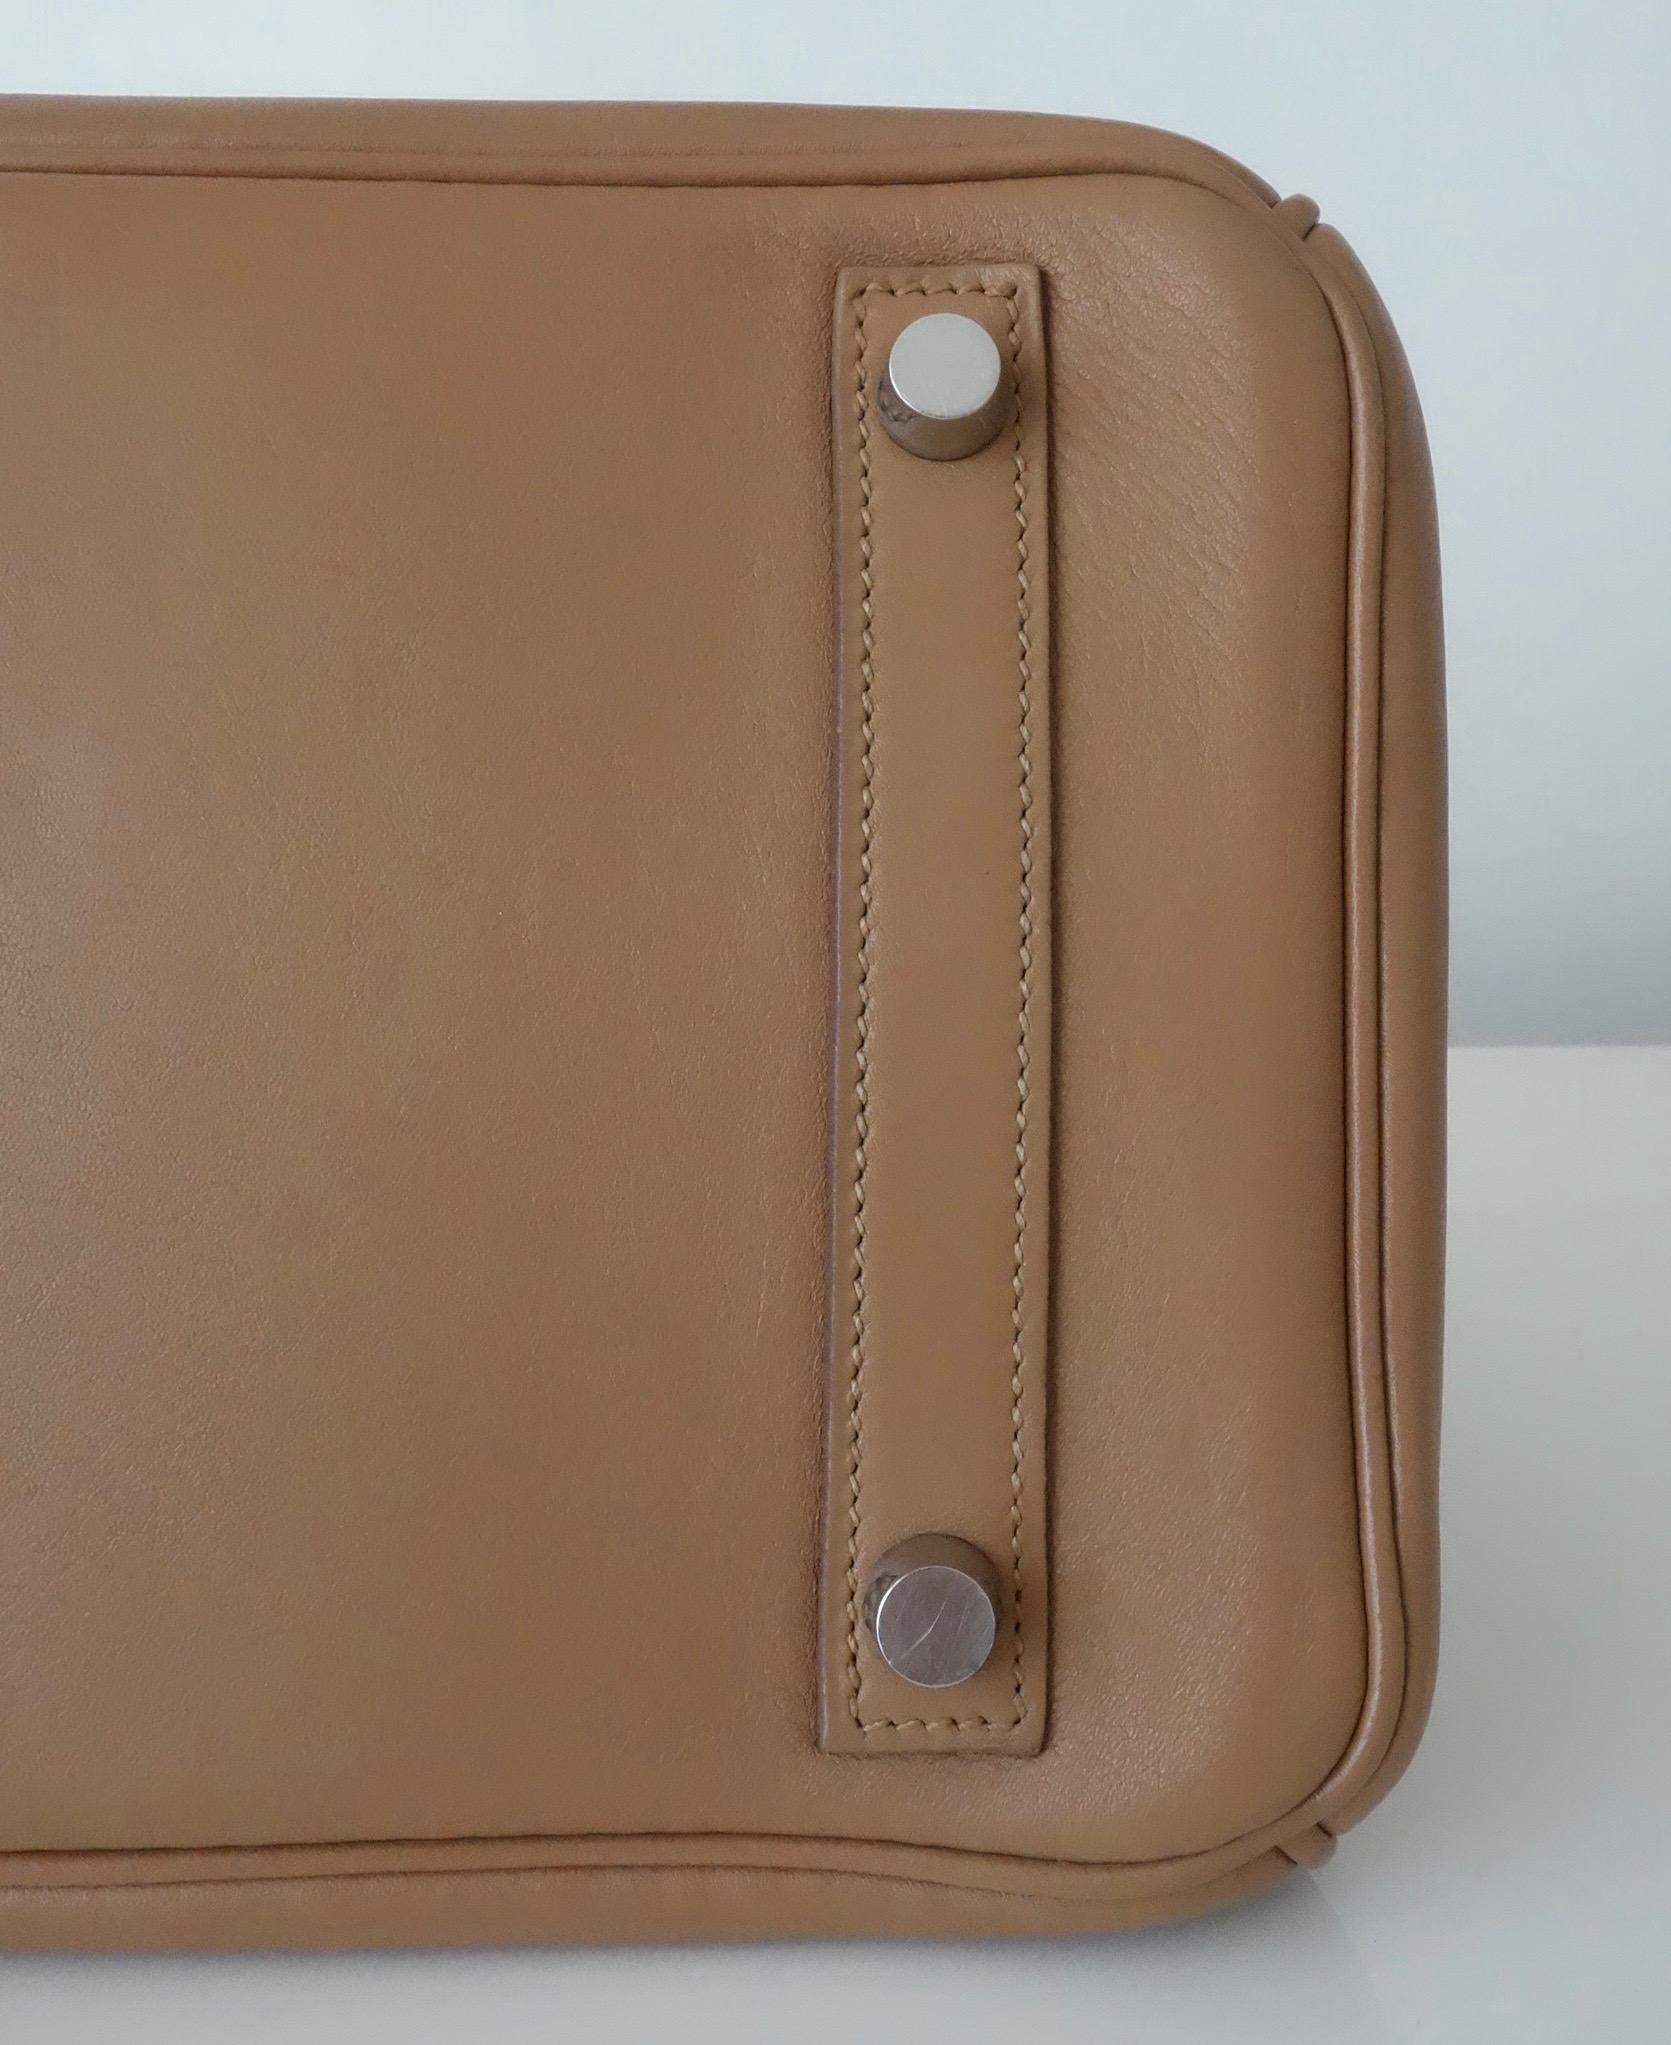 Hermès Swift Leather Biscuit Phw 30 cm Birkin Bag   14